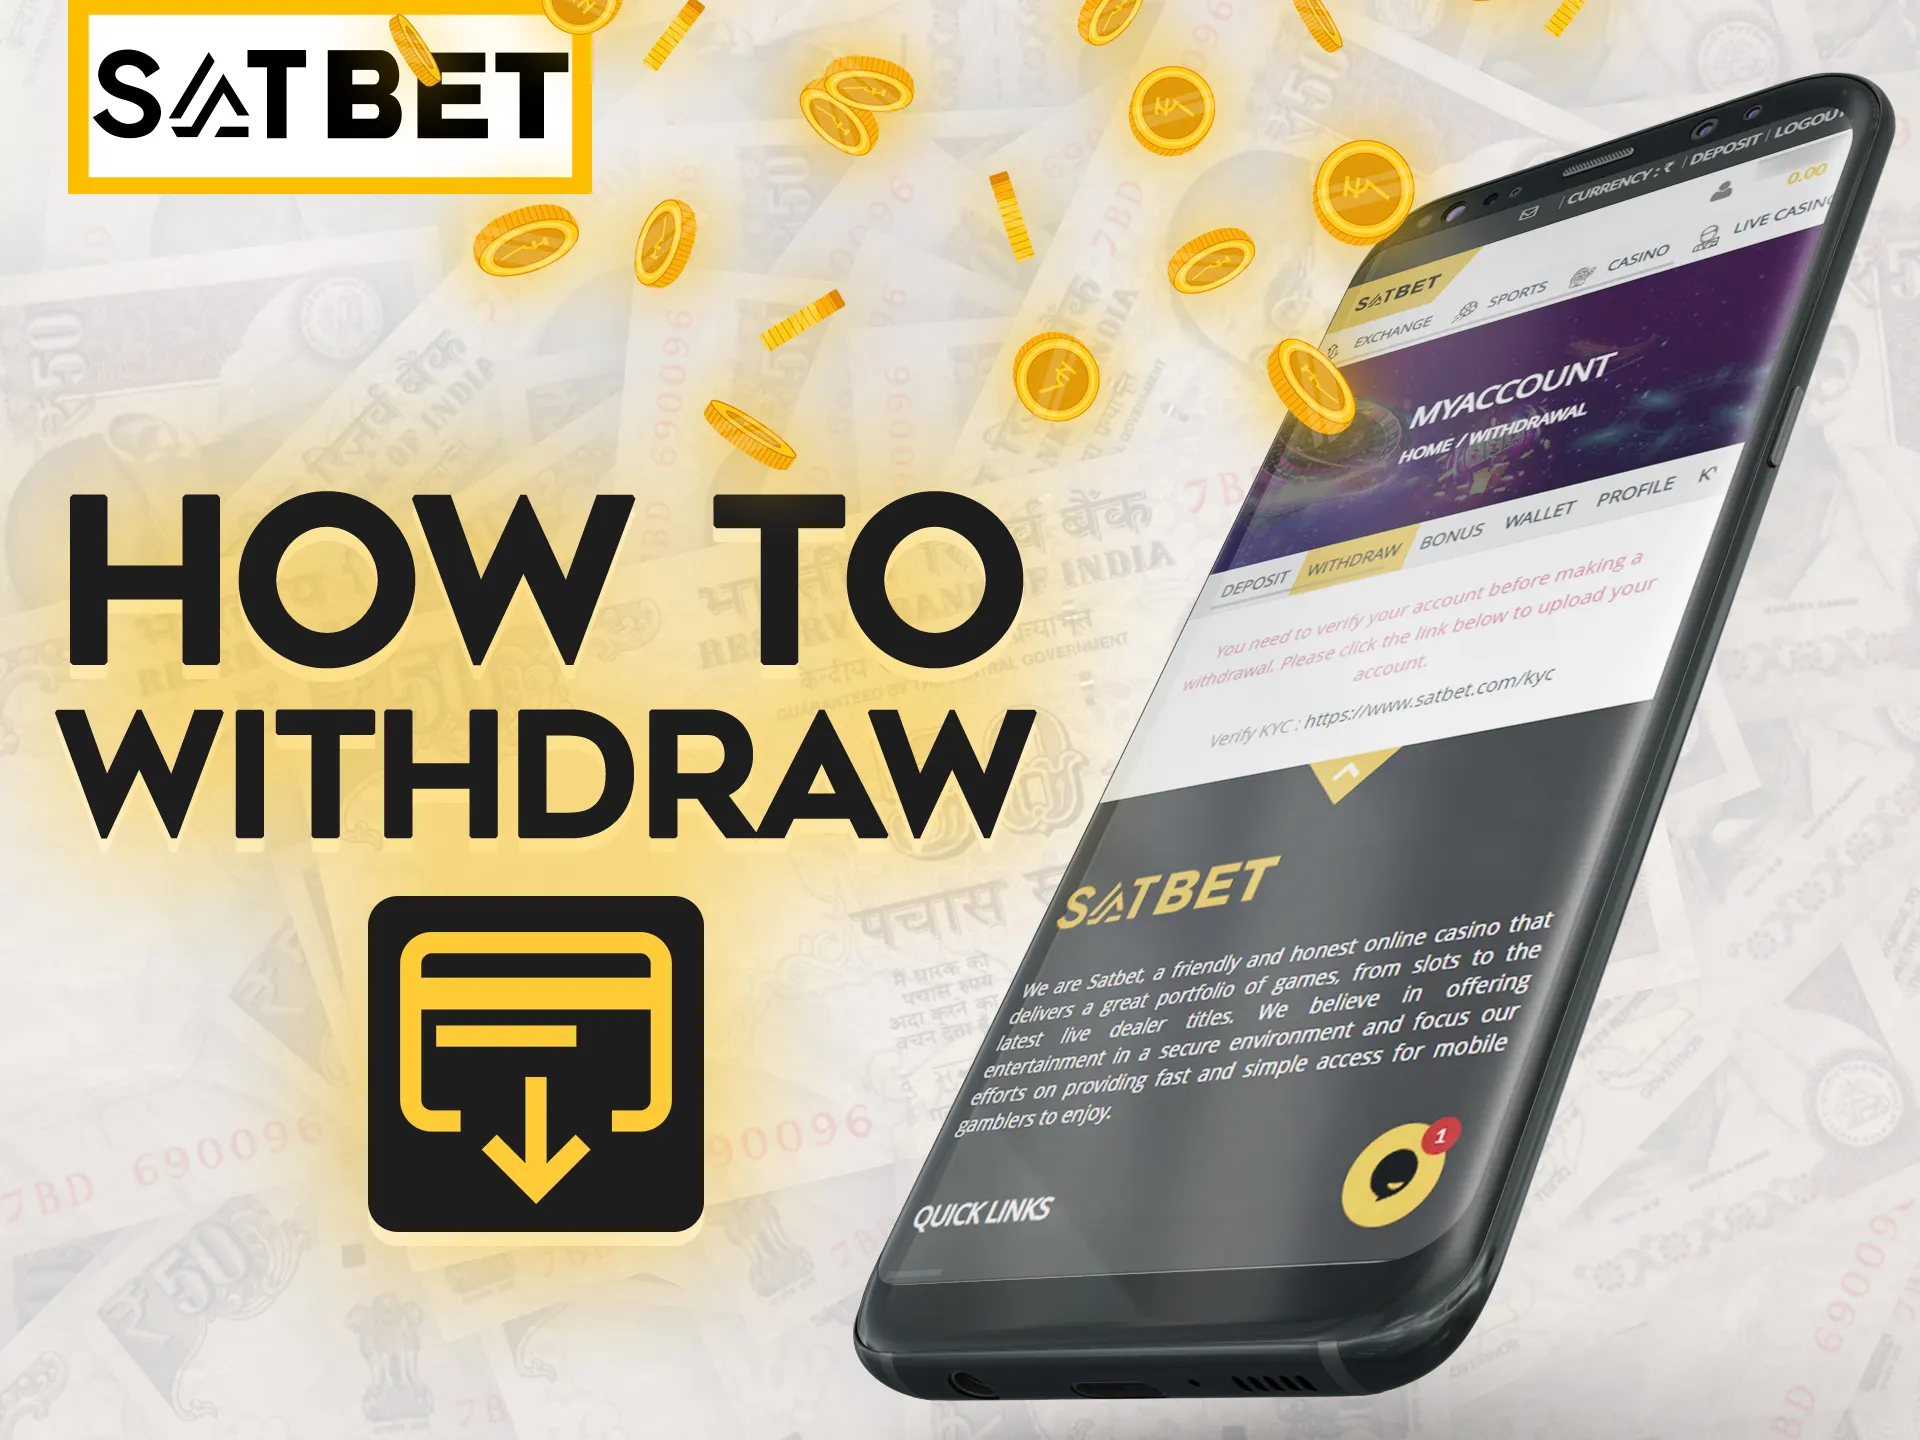 Withdraw money quicker in Satbet app.